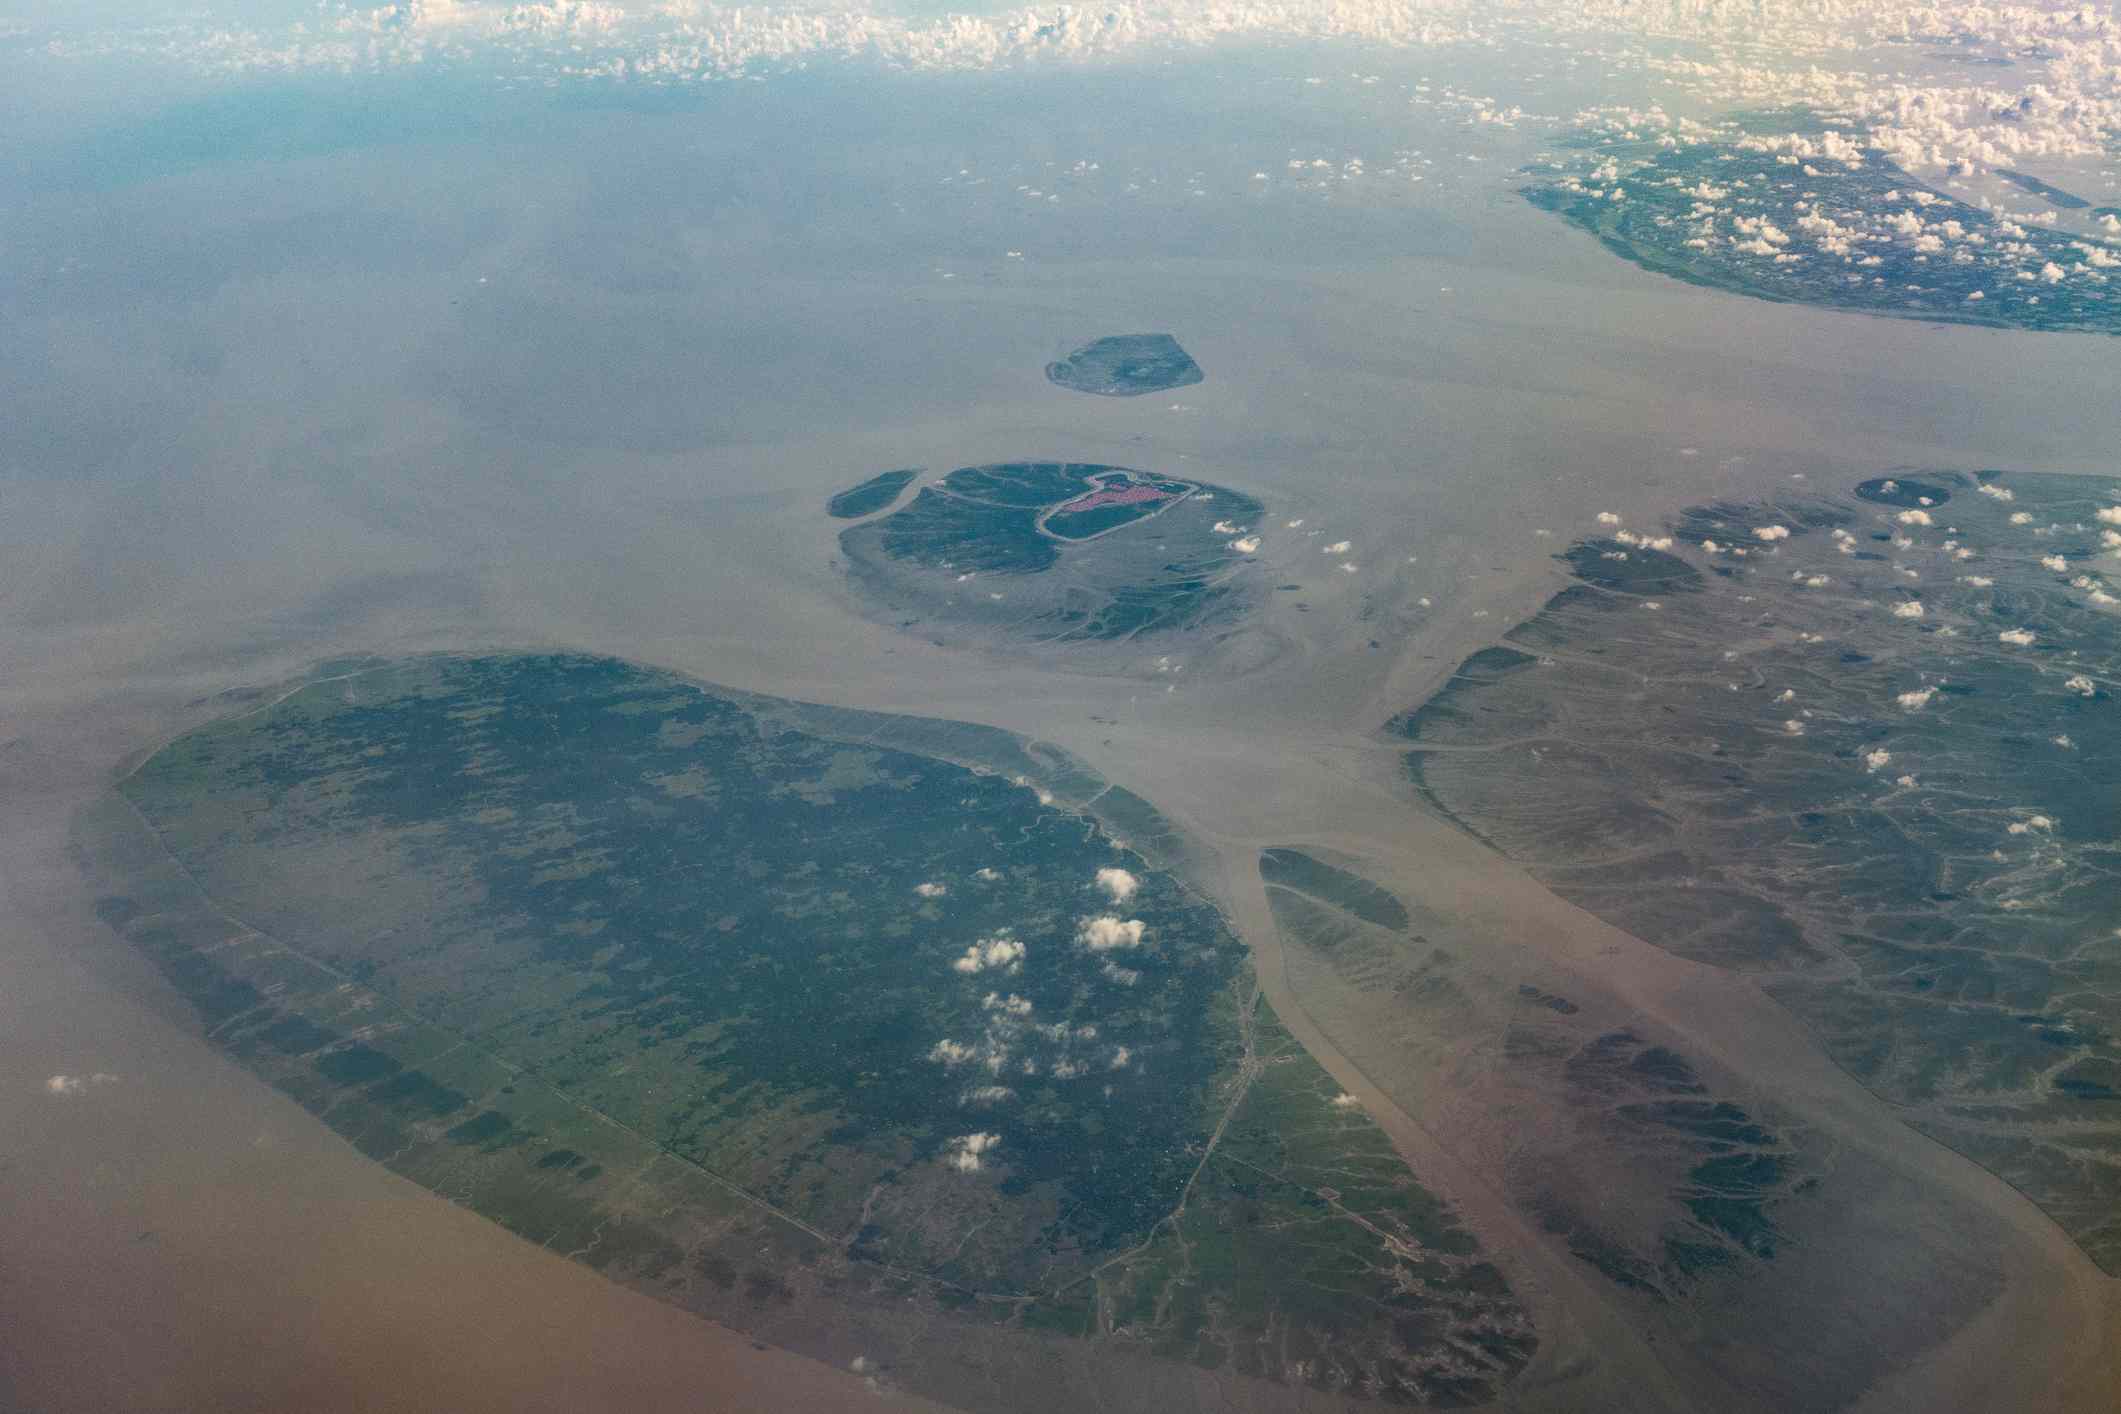 Una imagen aérea de Char Piya, antes llamada Thengar Char, situada en la Bahía de Bengala,